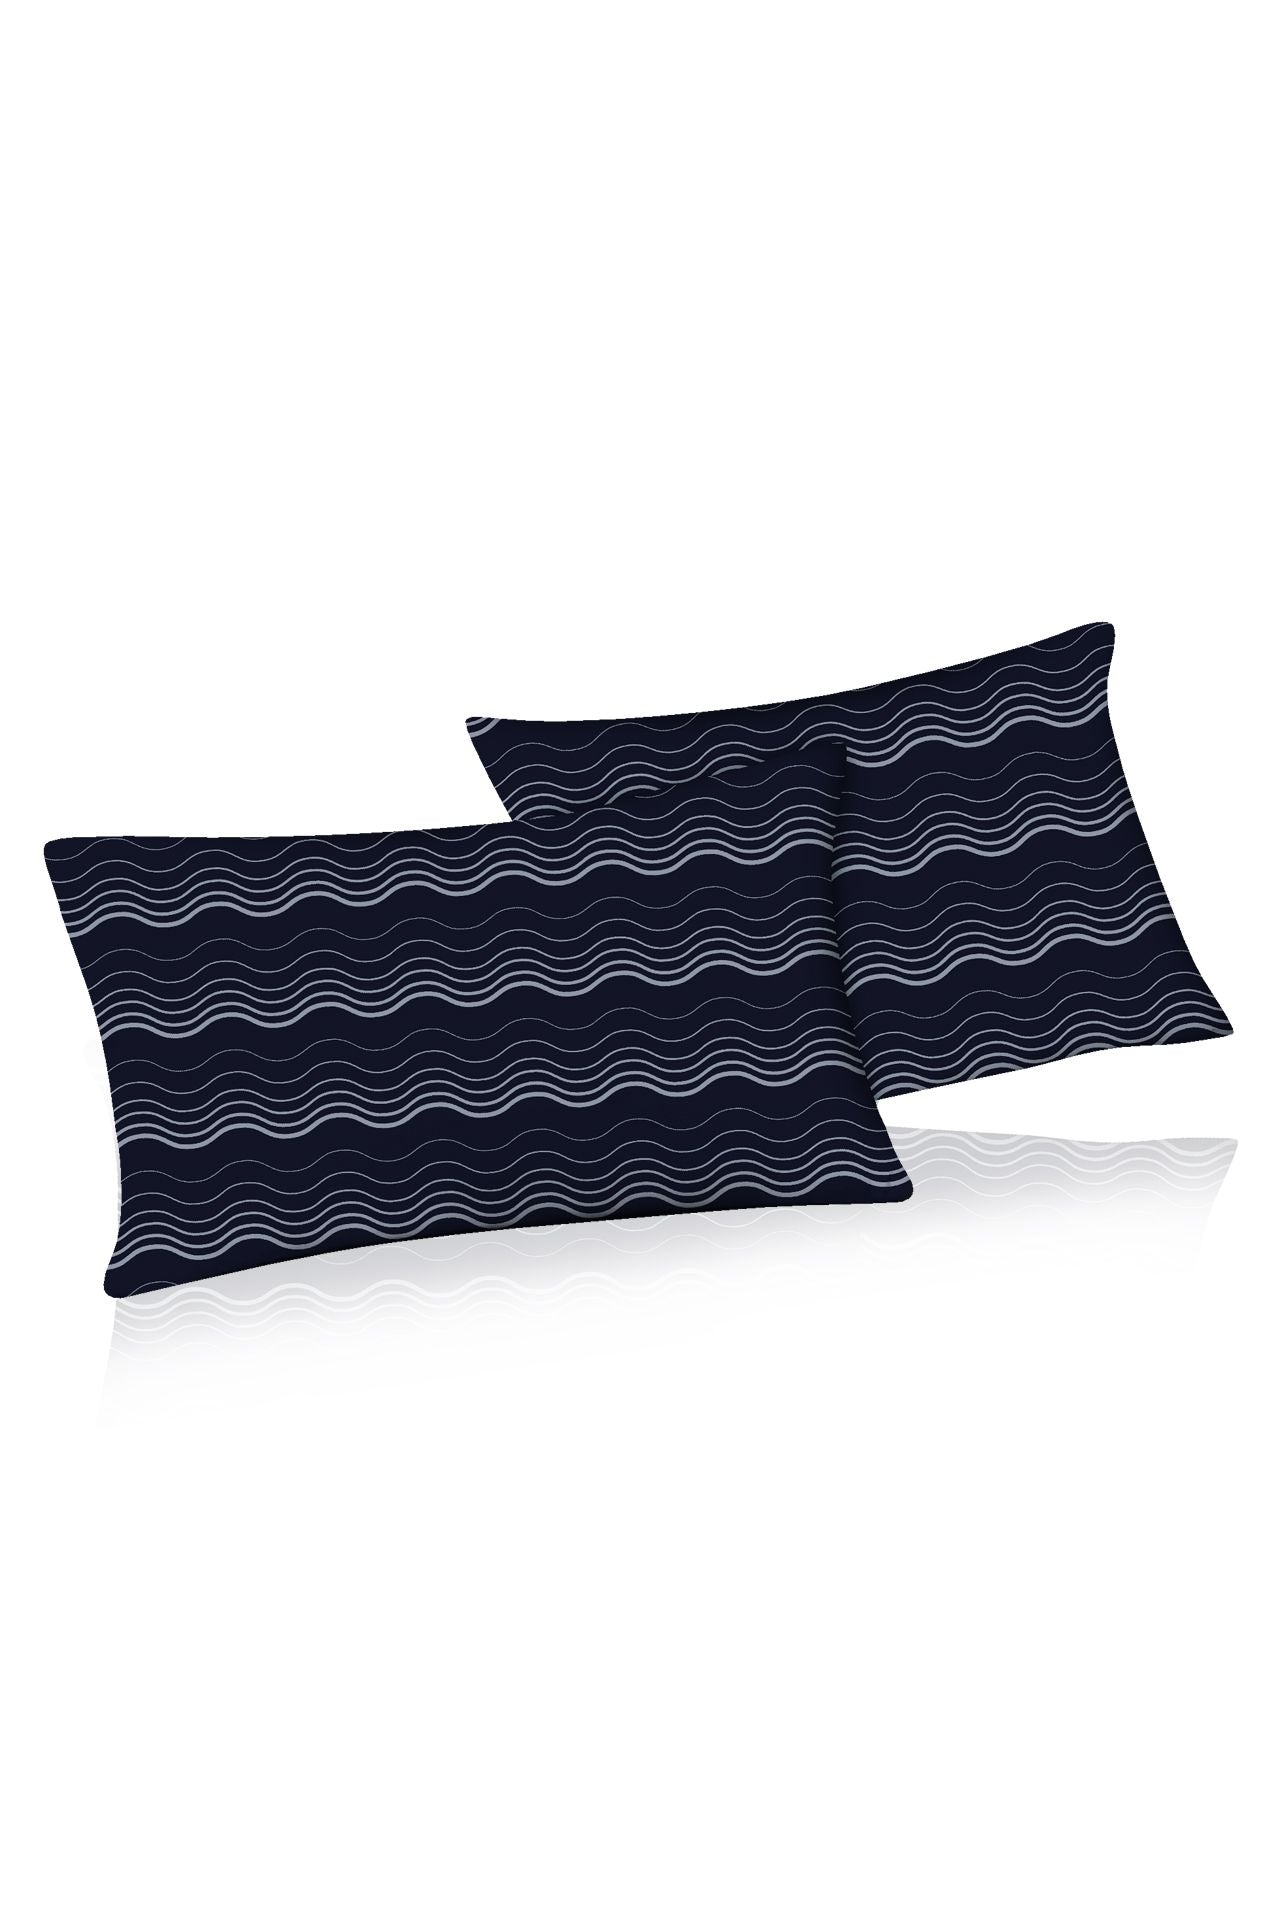 "printed throw pillows" "designer pillows" "decorative pillow case" "Kyle X Shahida"